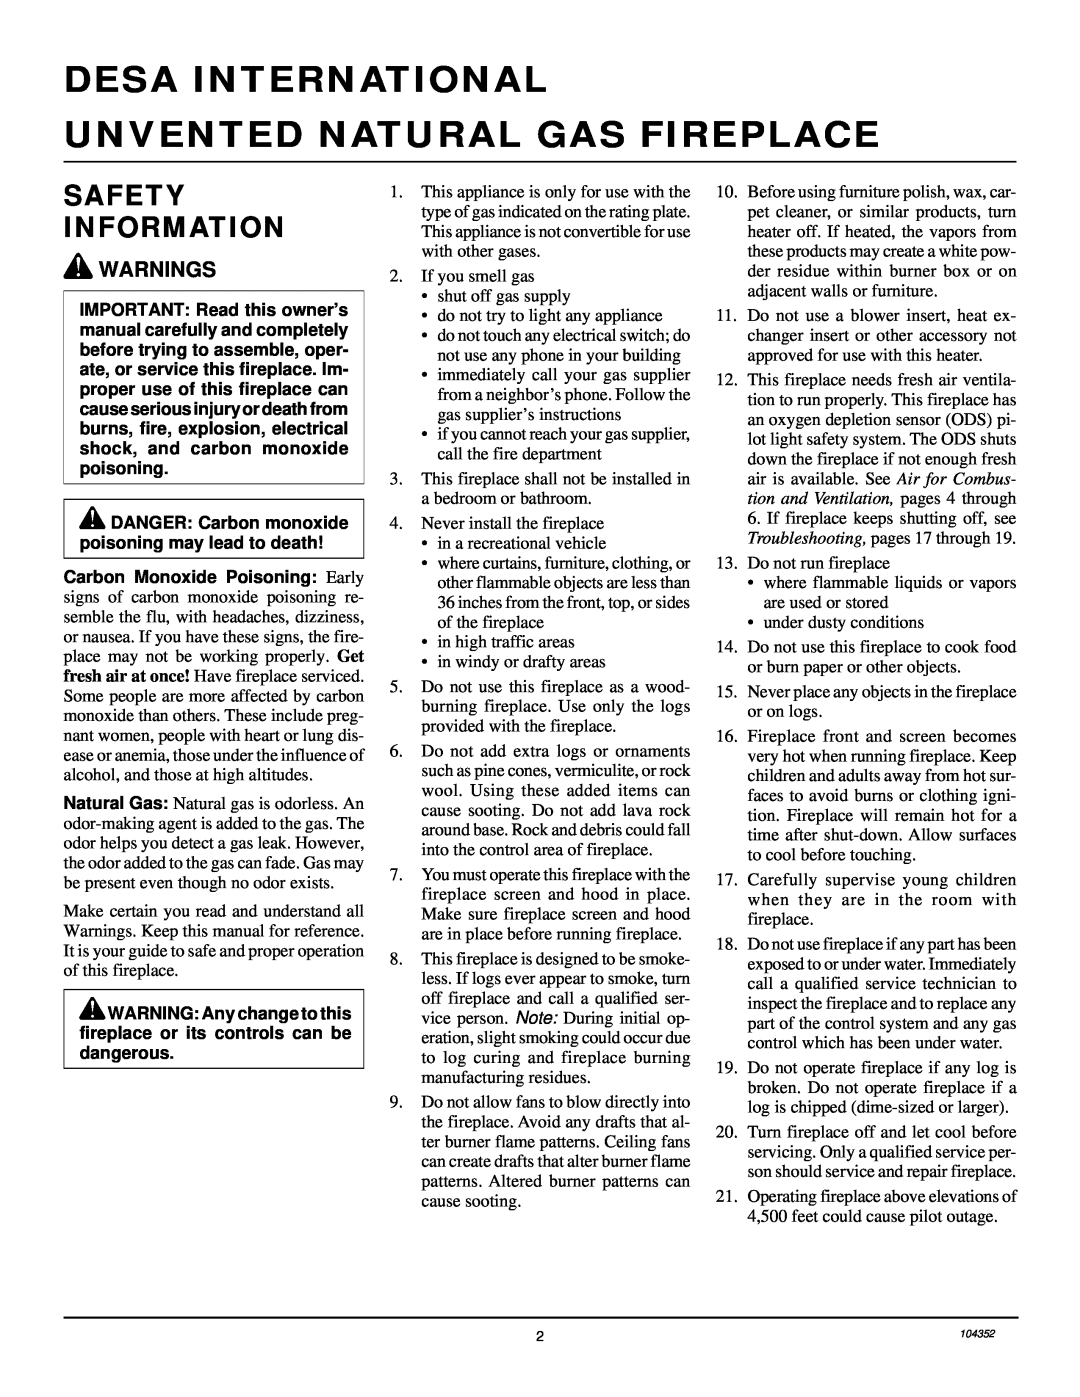 Desa VYGF33NR installation manual Desa International Unvented Natural Gas Fireplace, Safety Information, Warnings 